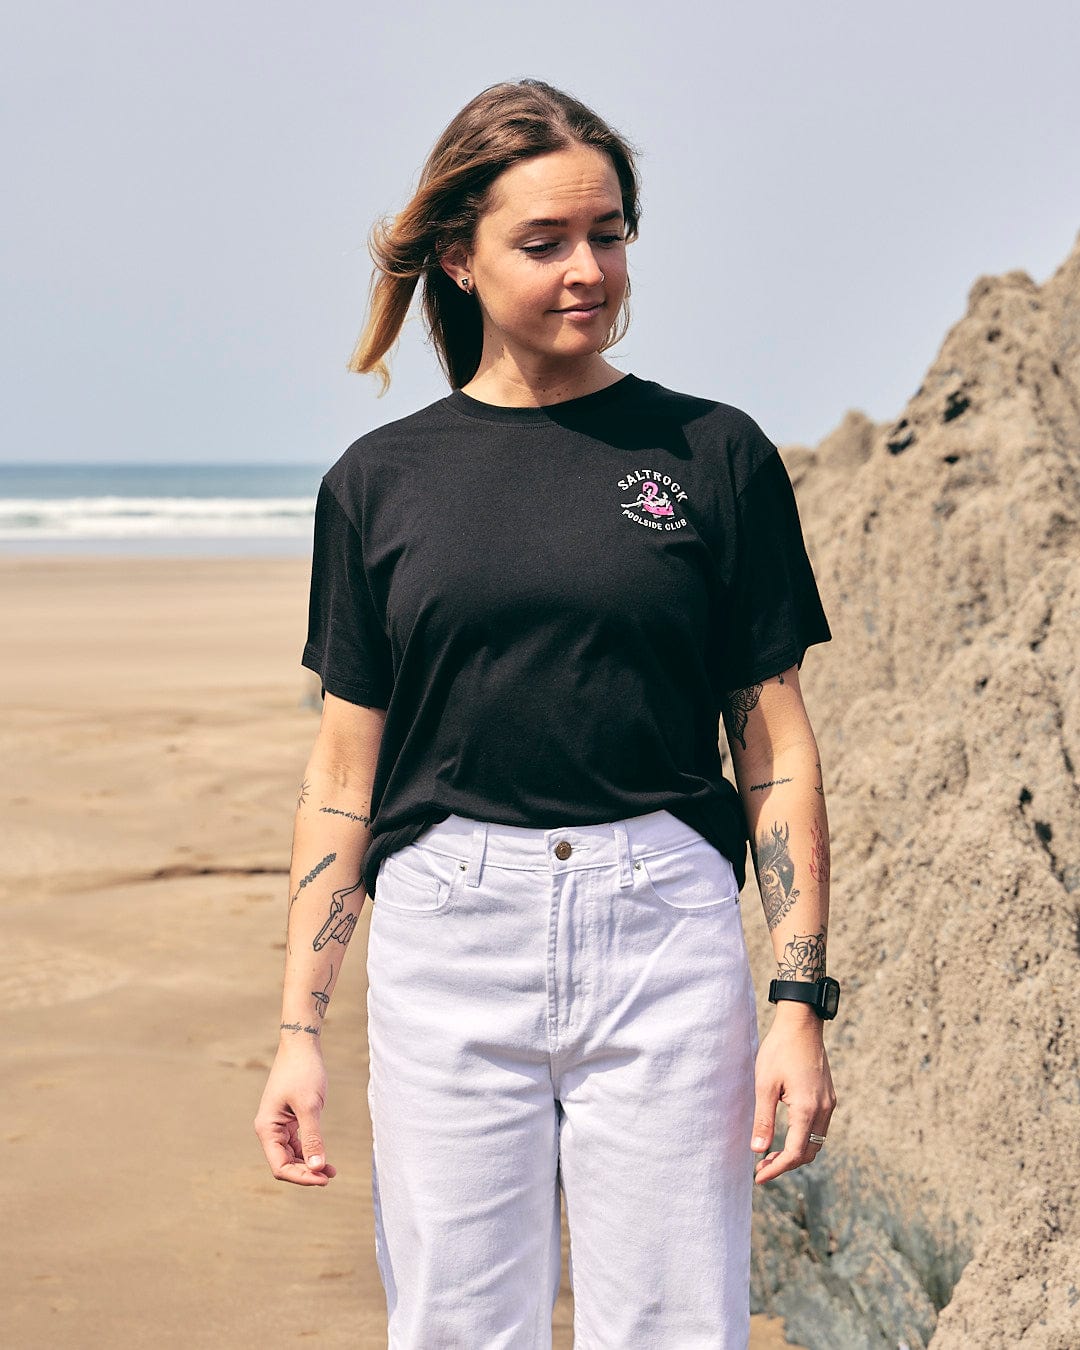 A woman standing on the beach wearing a Saltrock - Poolside Womens Short Sleeve T-Shirt - Black.